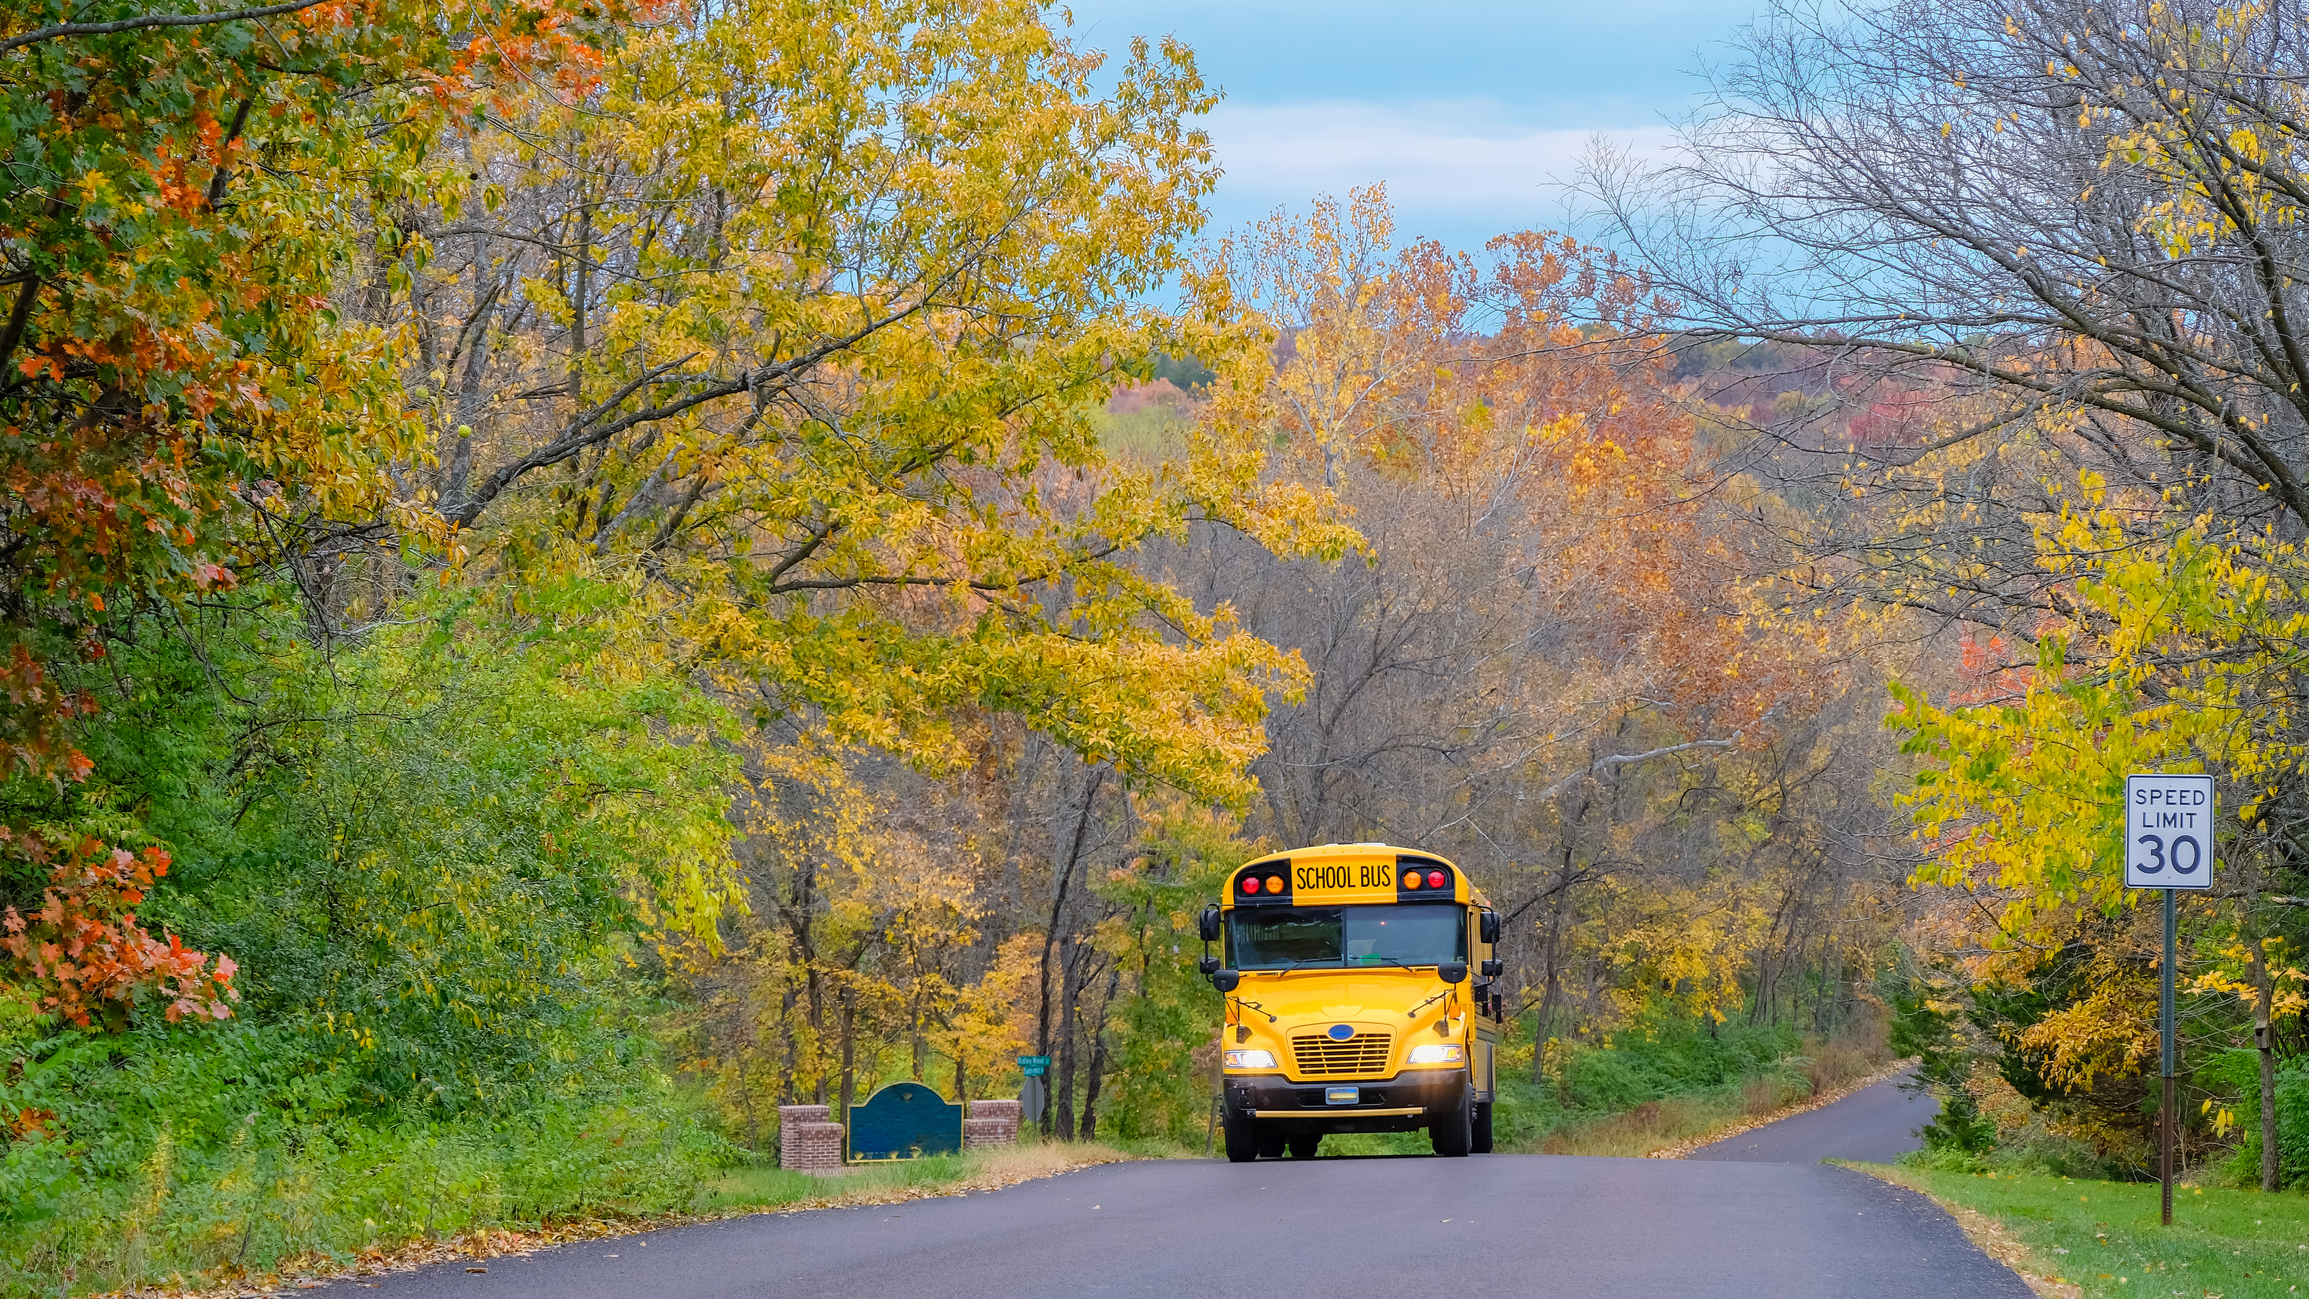 School Bus on Road